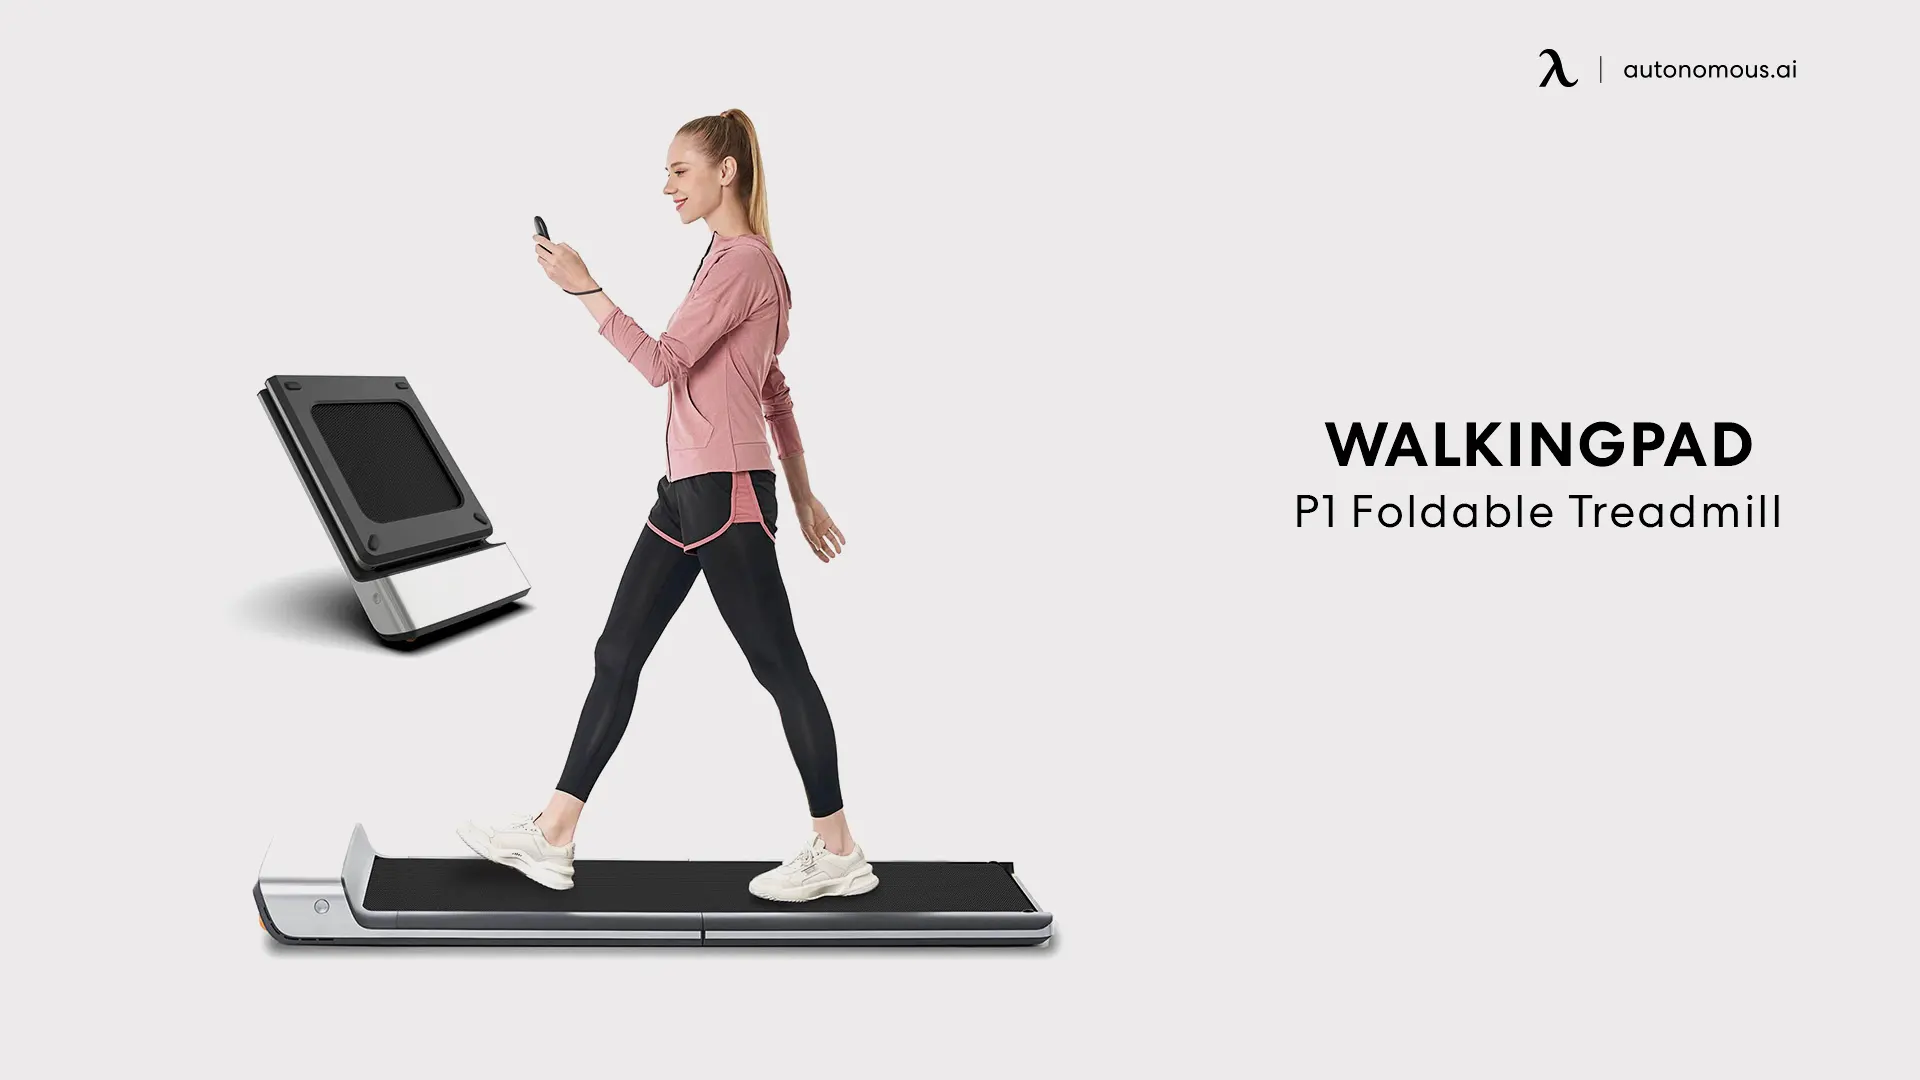 WalkingPad P1 Foldable Treadmill Review